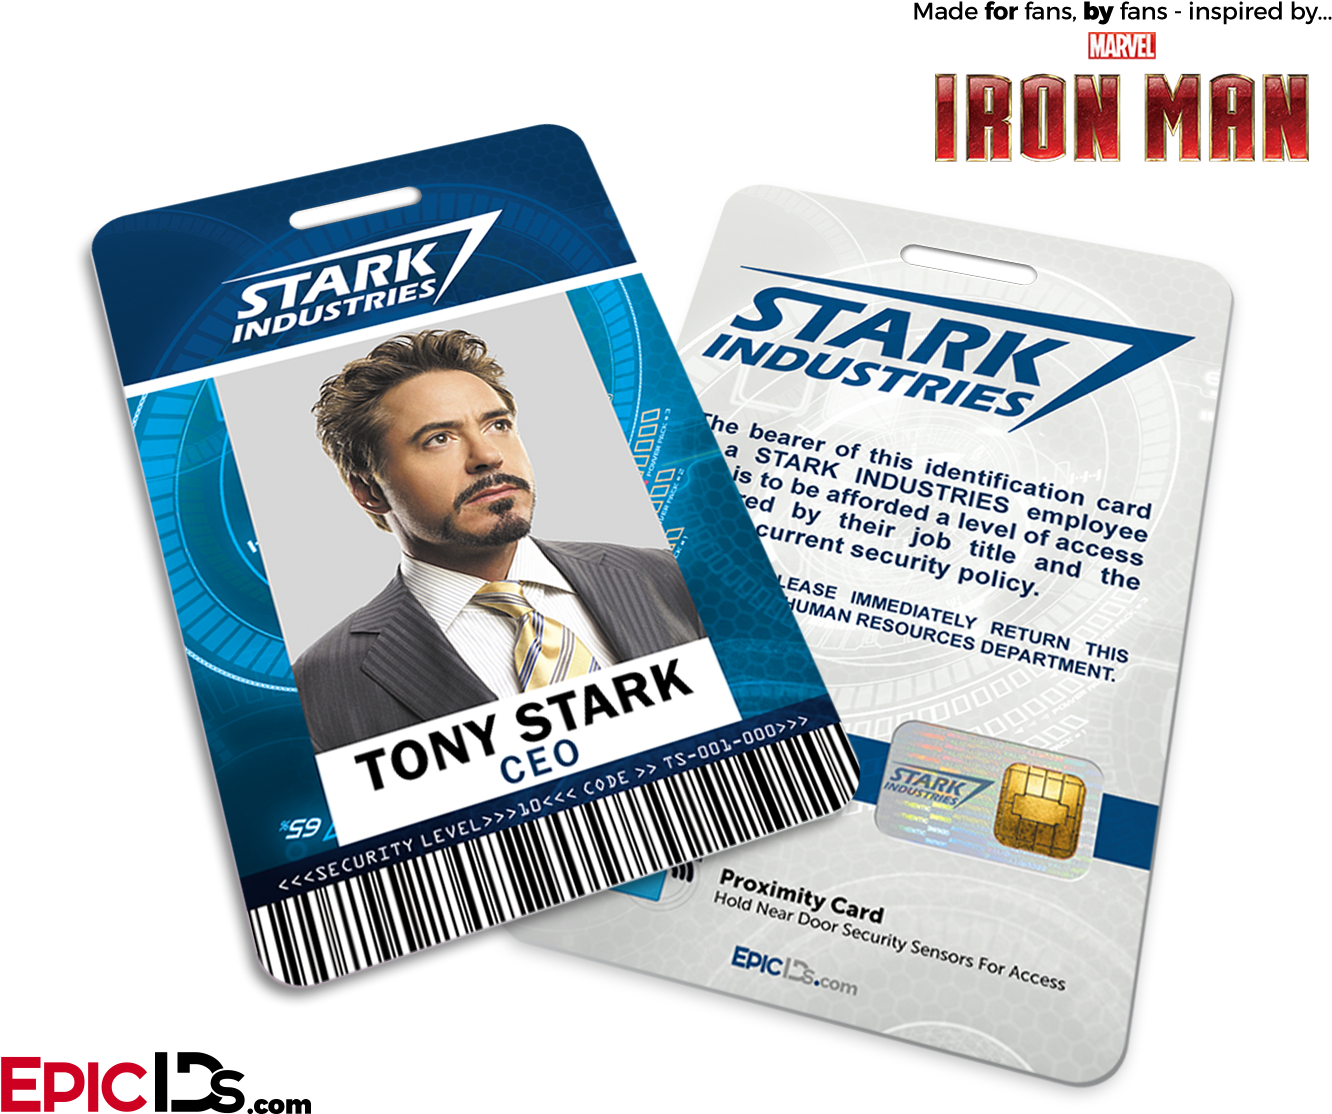 Stark Industries I D Card Tony Stark